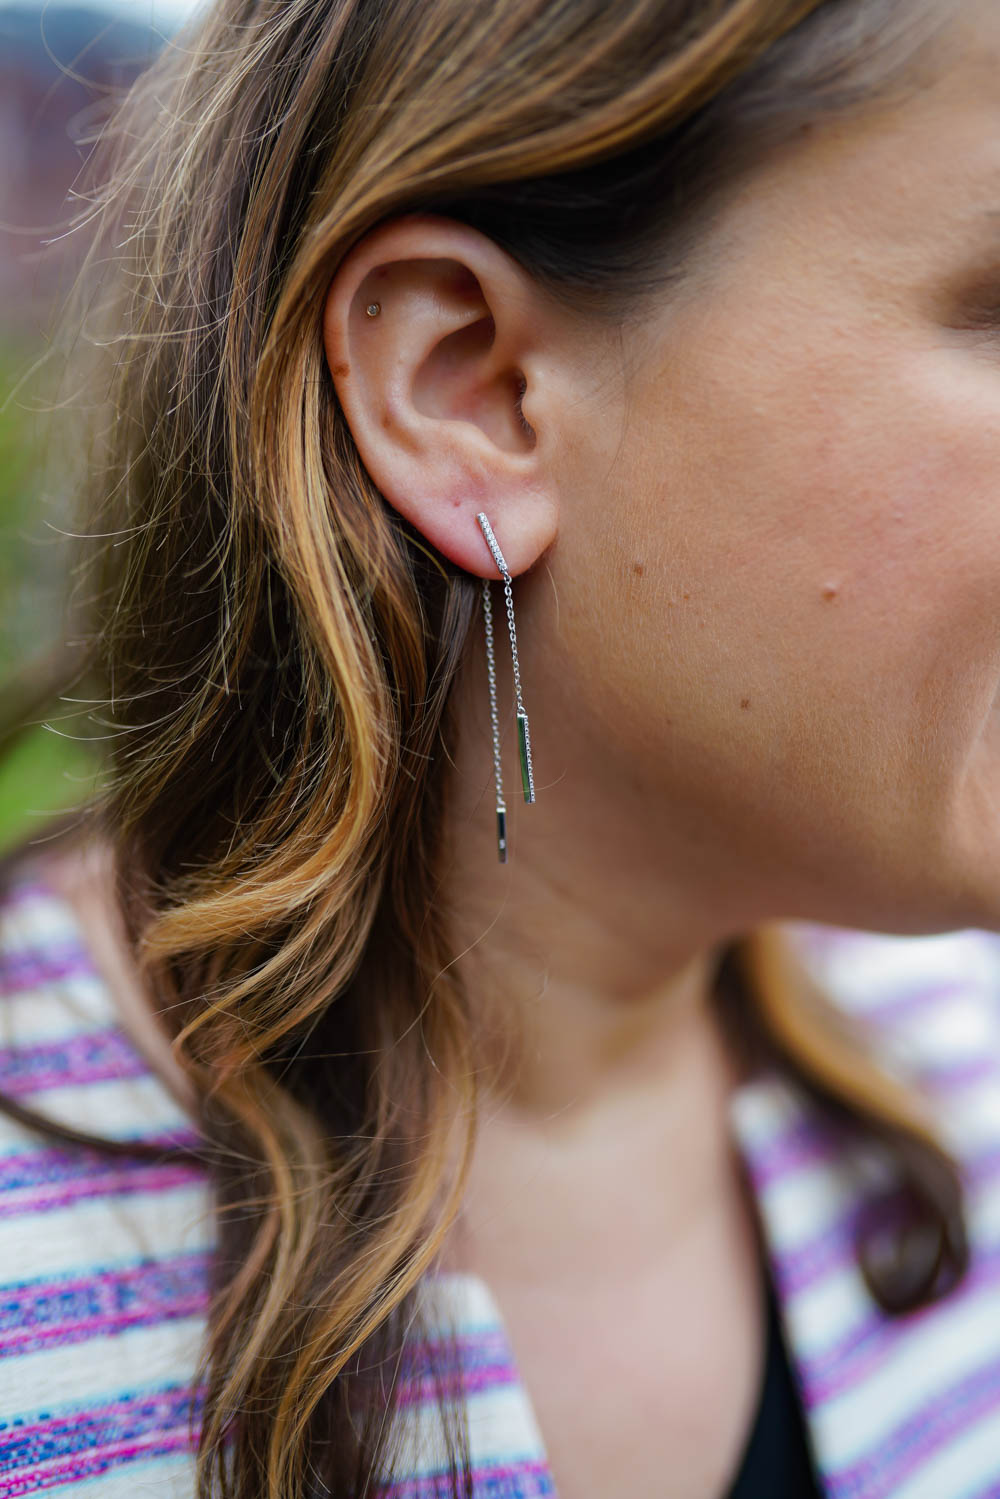 fun earrings